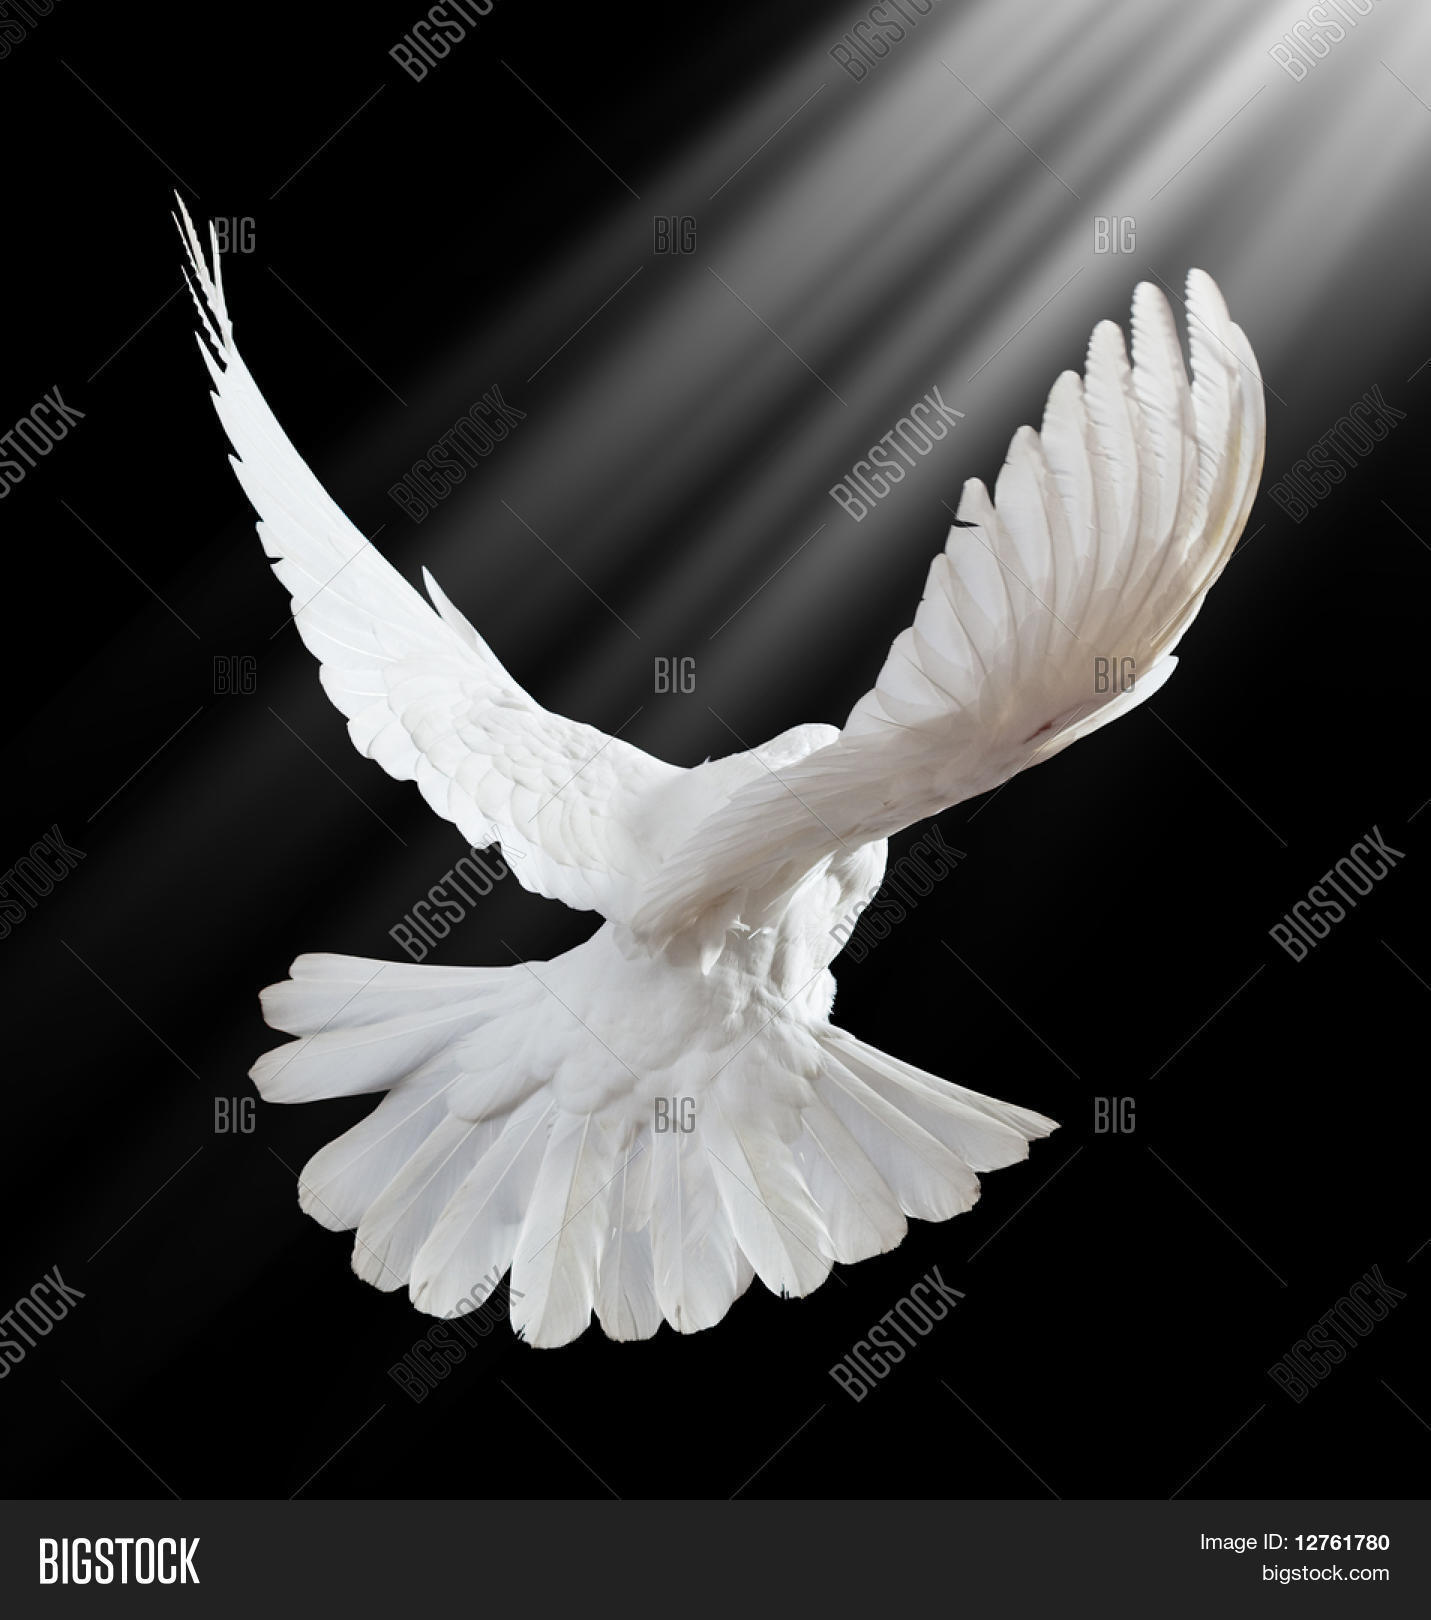 Free Flying White Dove On Black Image & Photo | Bigstock